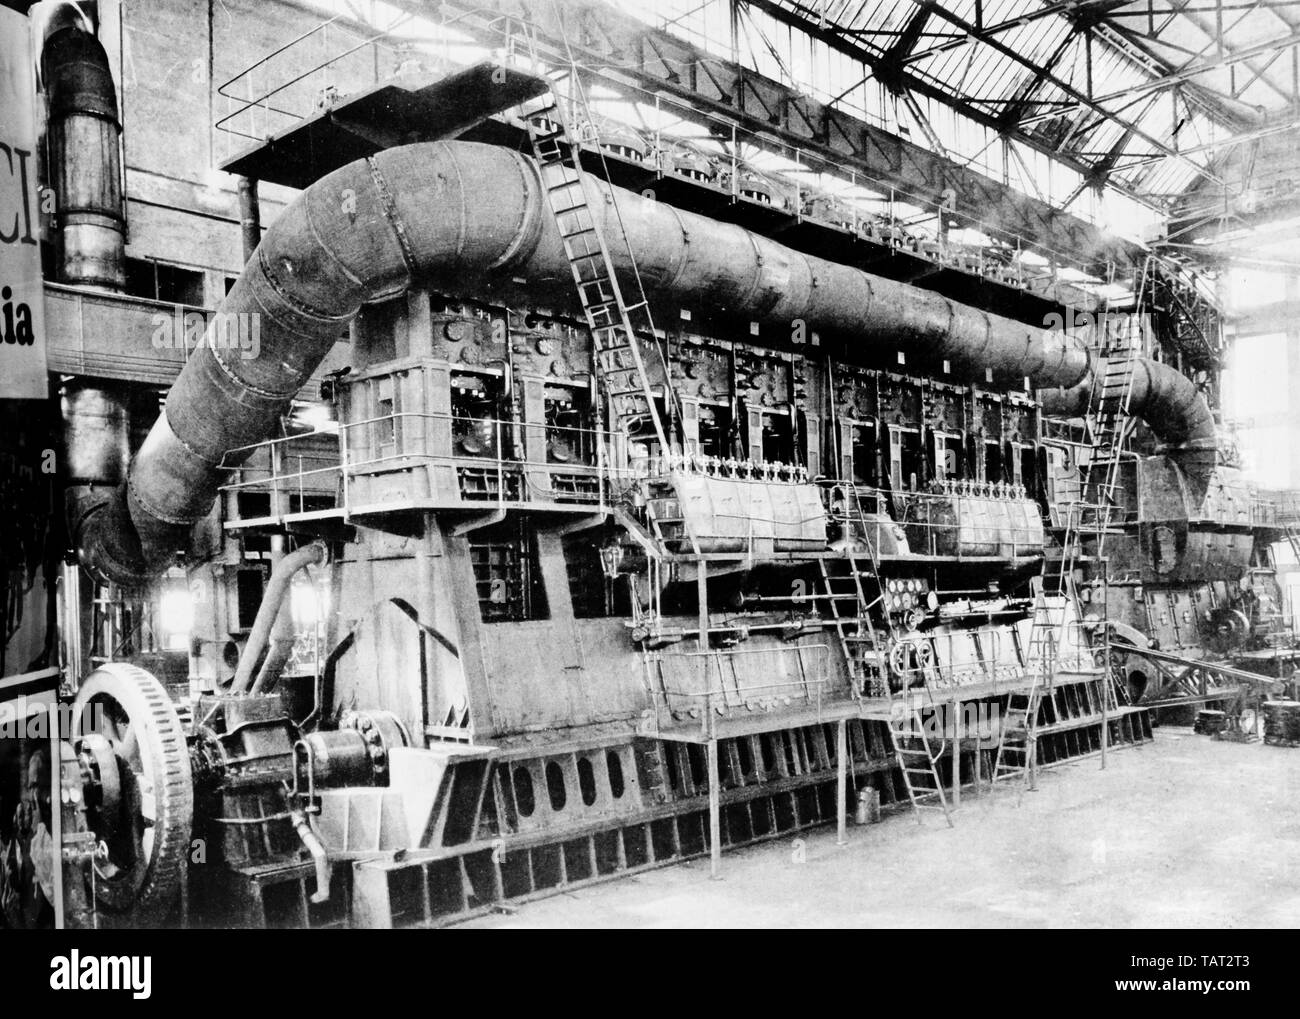 engine of the transatlantic saturnia, italy, 30s Stock Photo